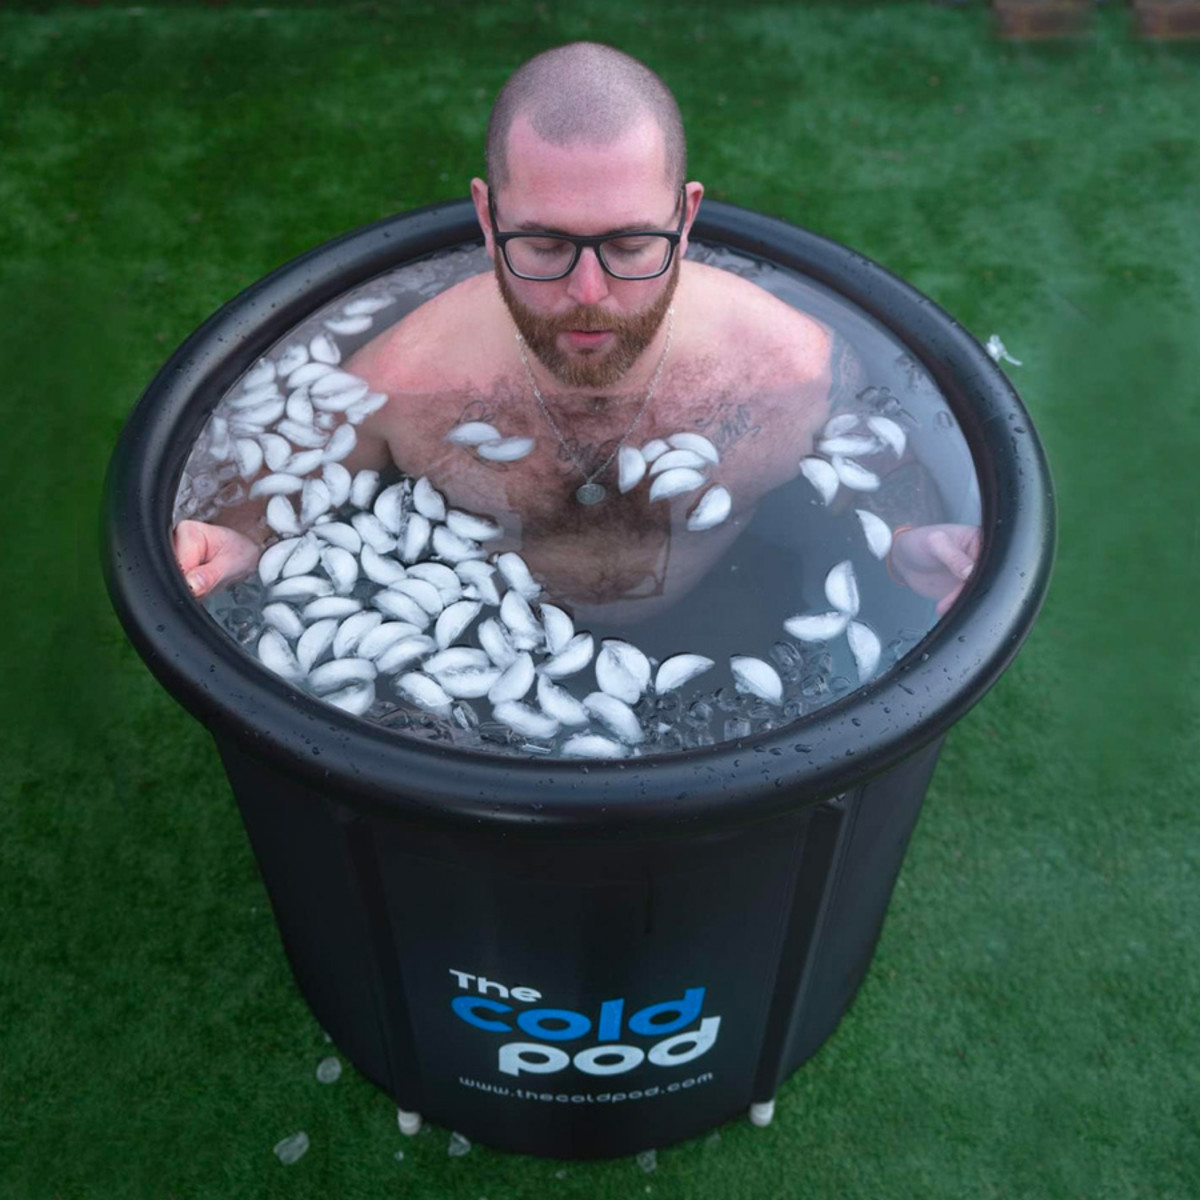 https://www.mensjournal.com/.image/t_share/MjAxMzA5Njc1NzM0NTA4ODA4/the-cold-pod-ice-bath-tub.jpg